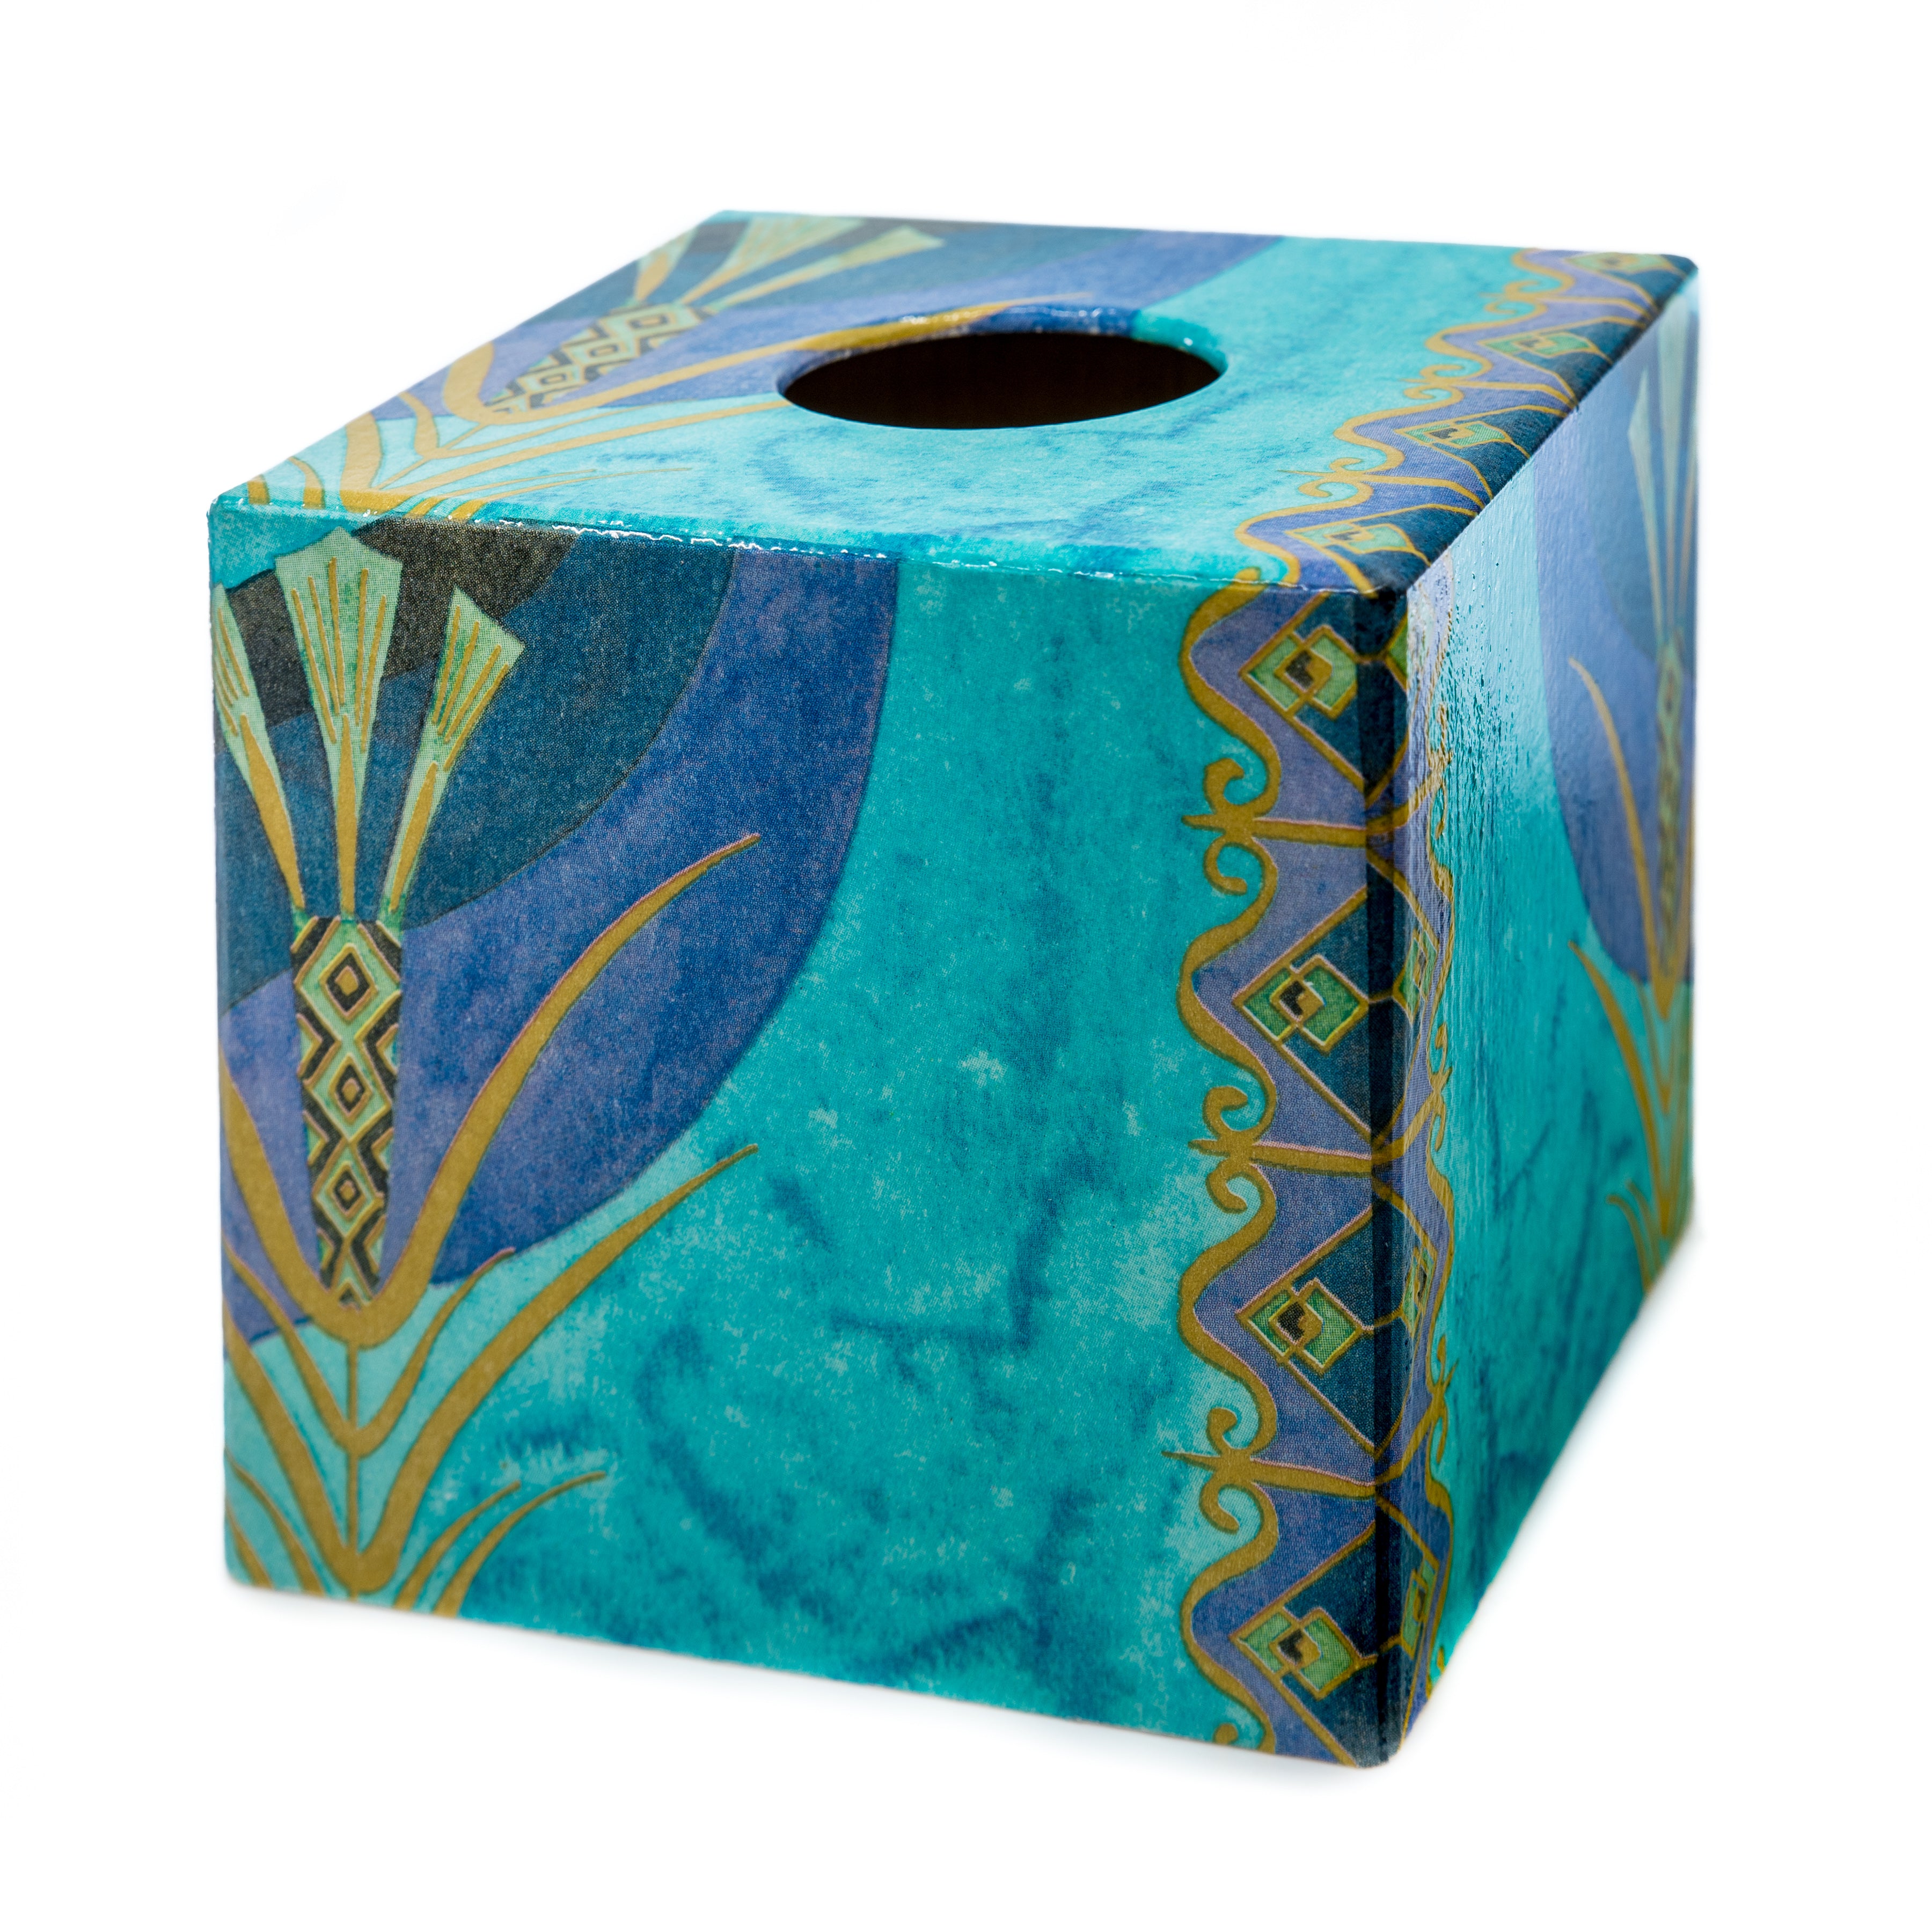 Turquoise Egypt Tissue box cover